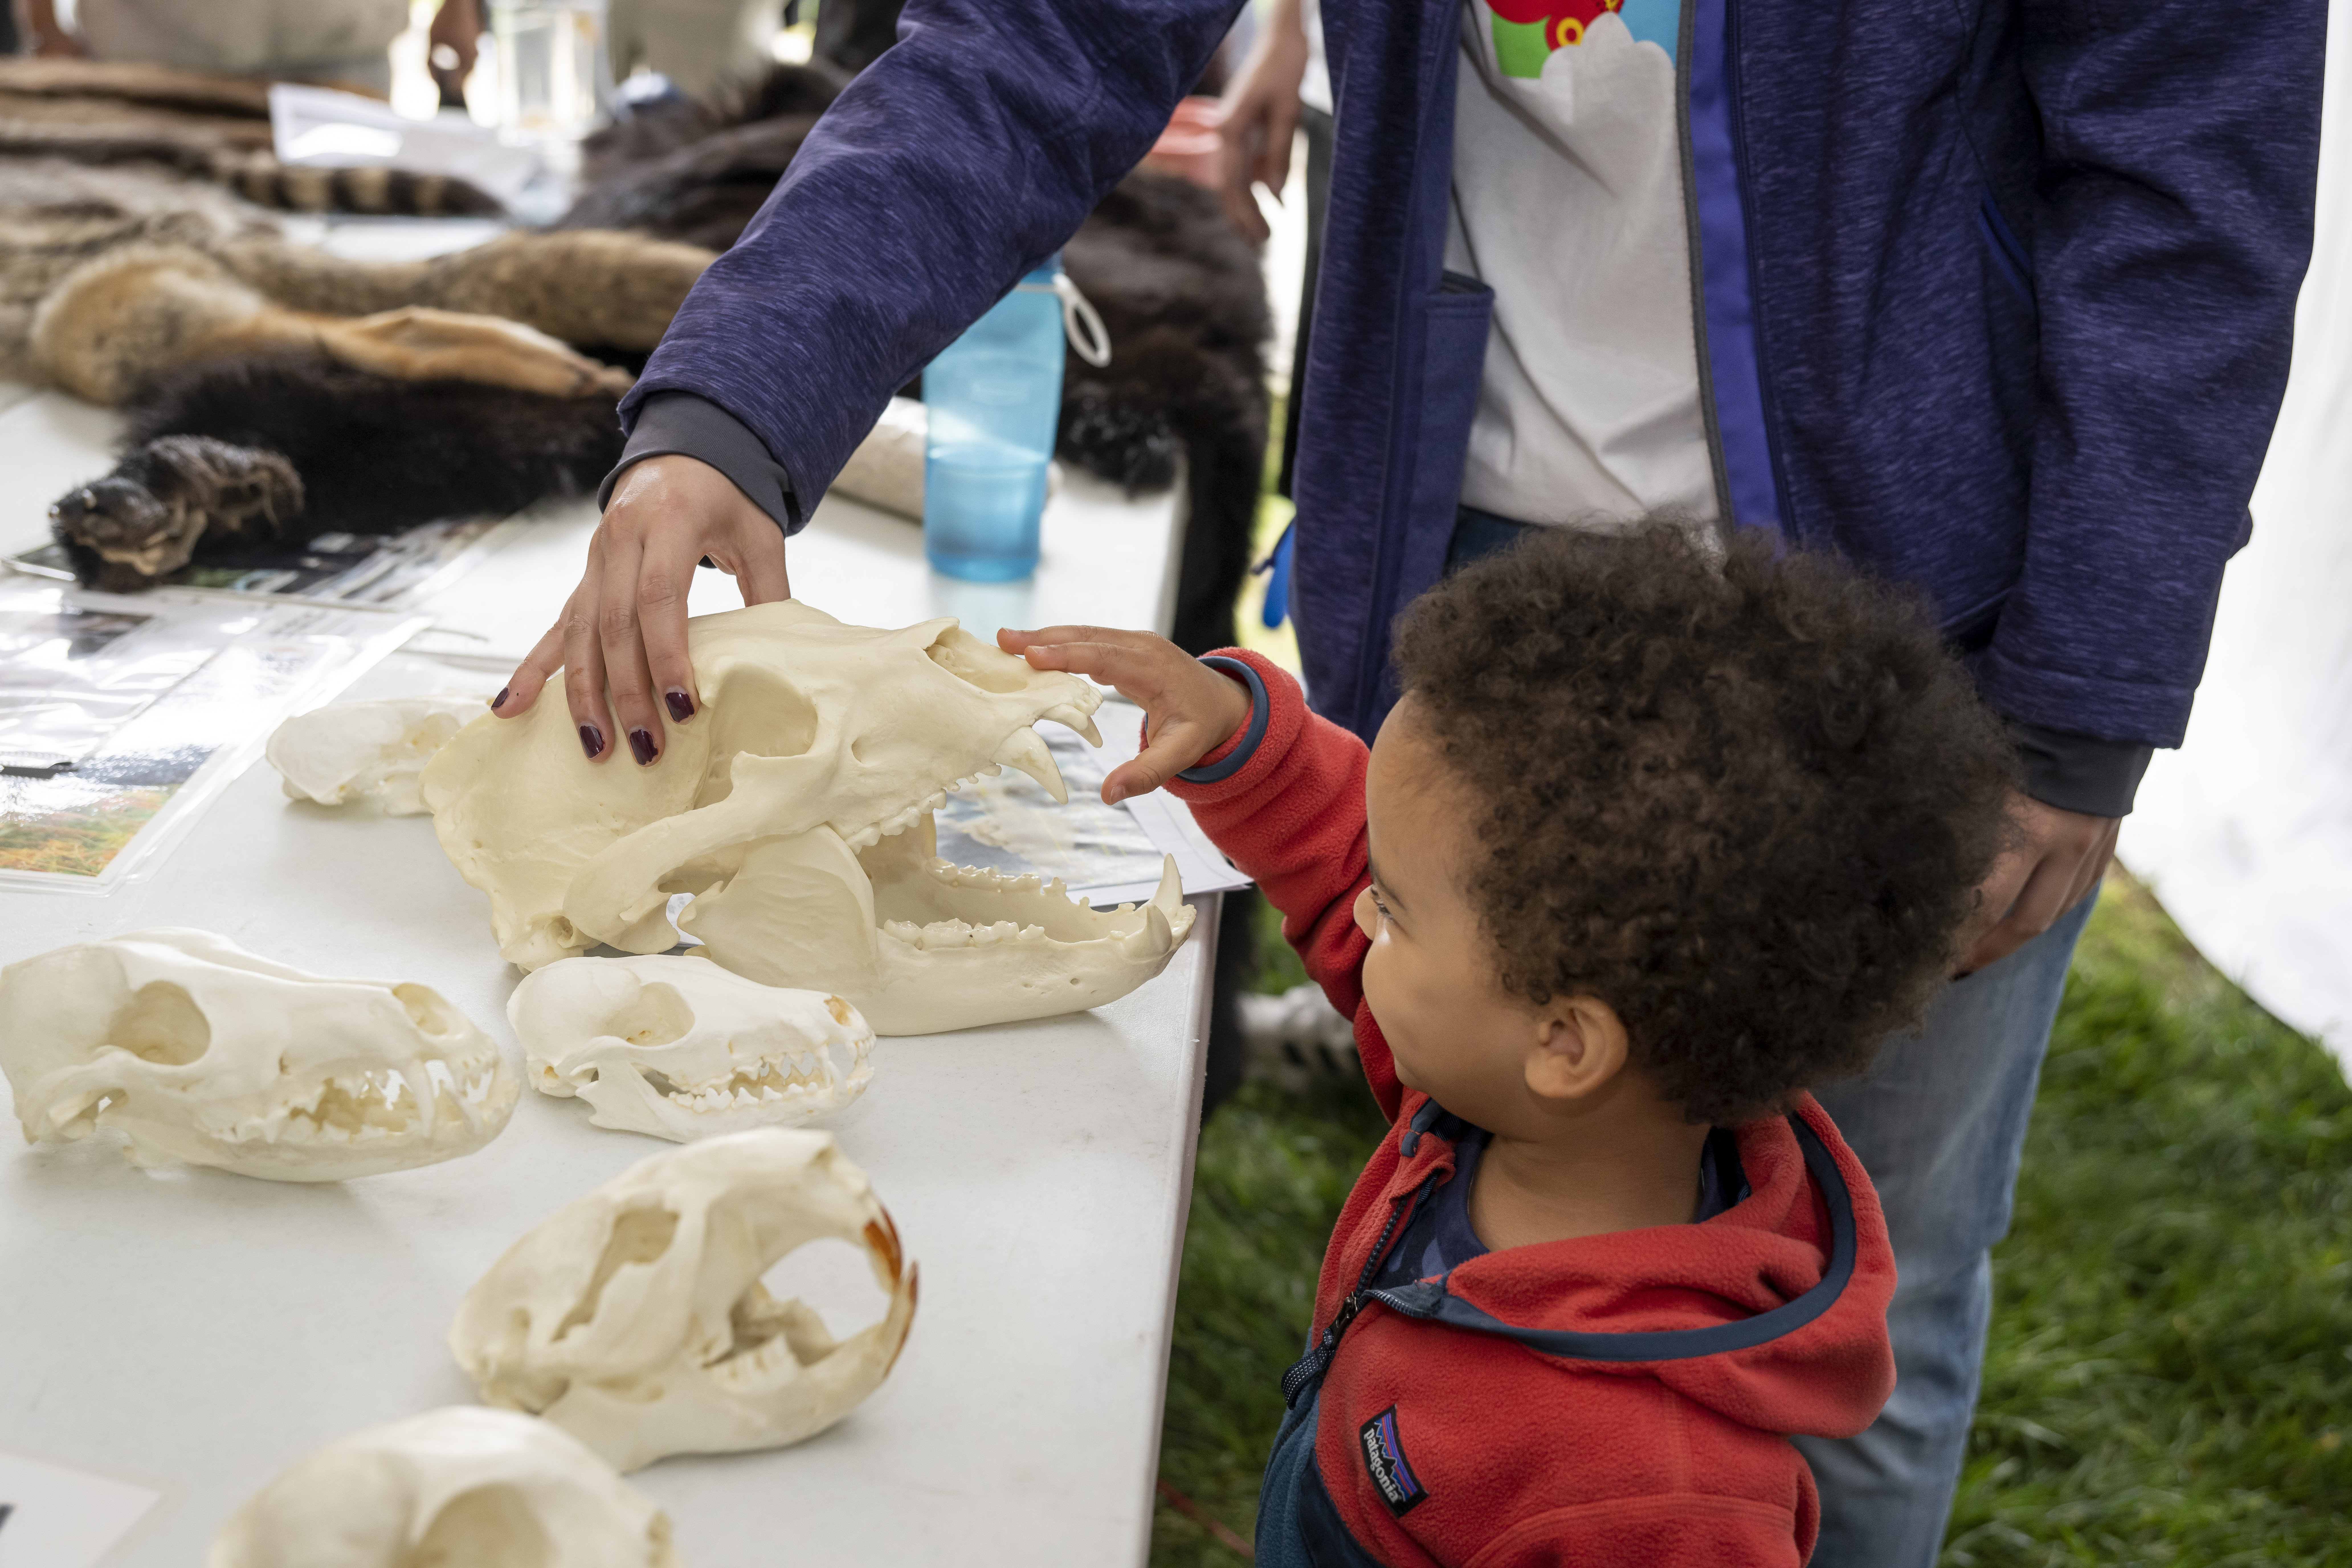 Child touching animal skull at Maryland Day exhibit